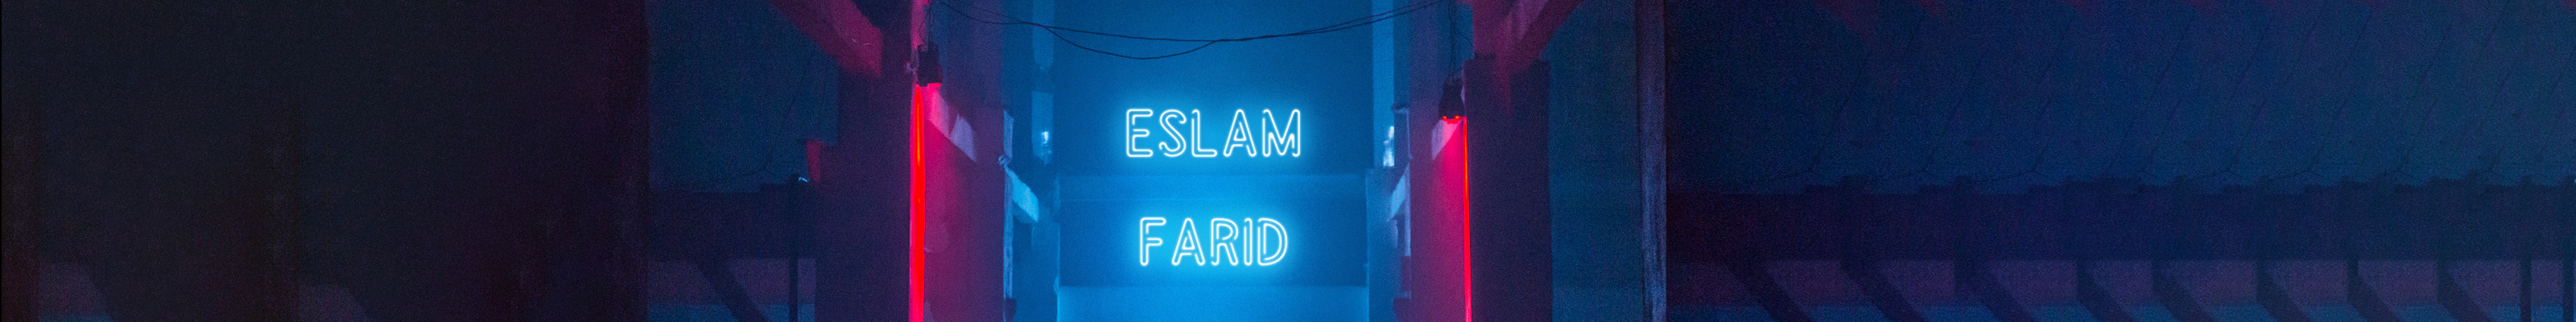 Banner de perfil de Eslam Farid